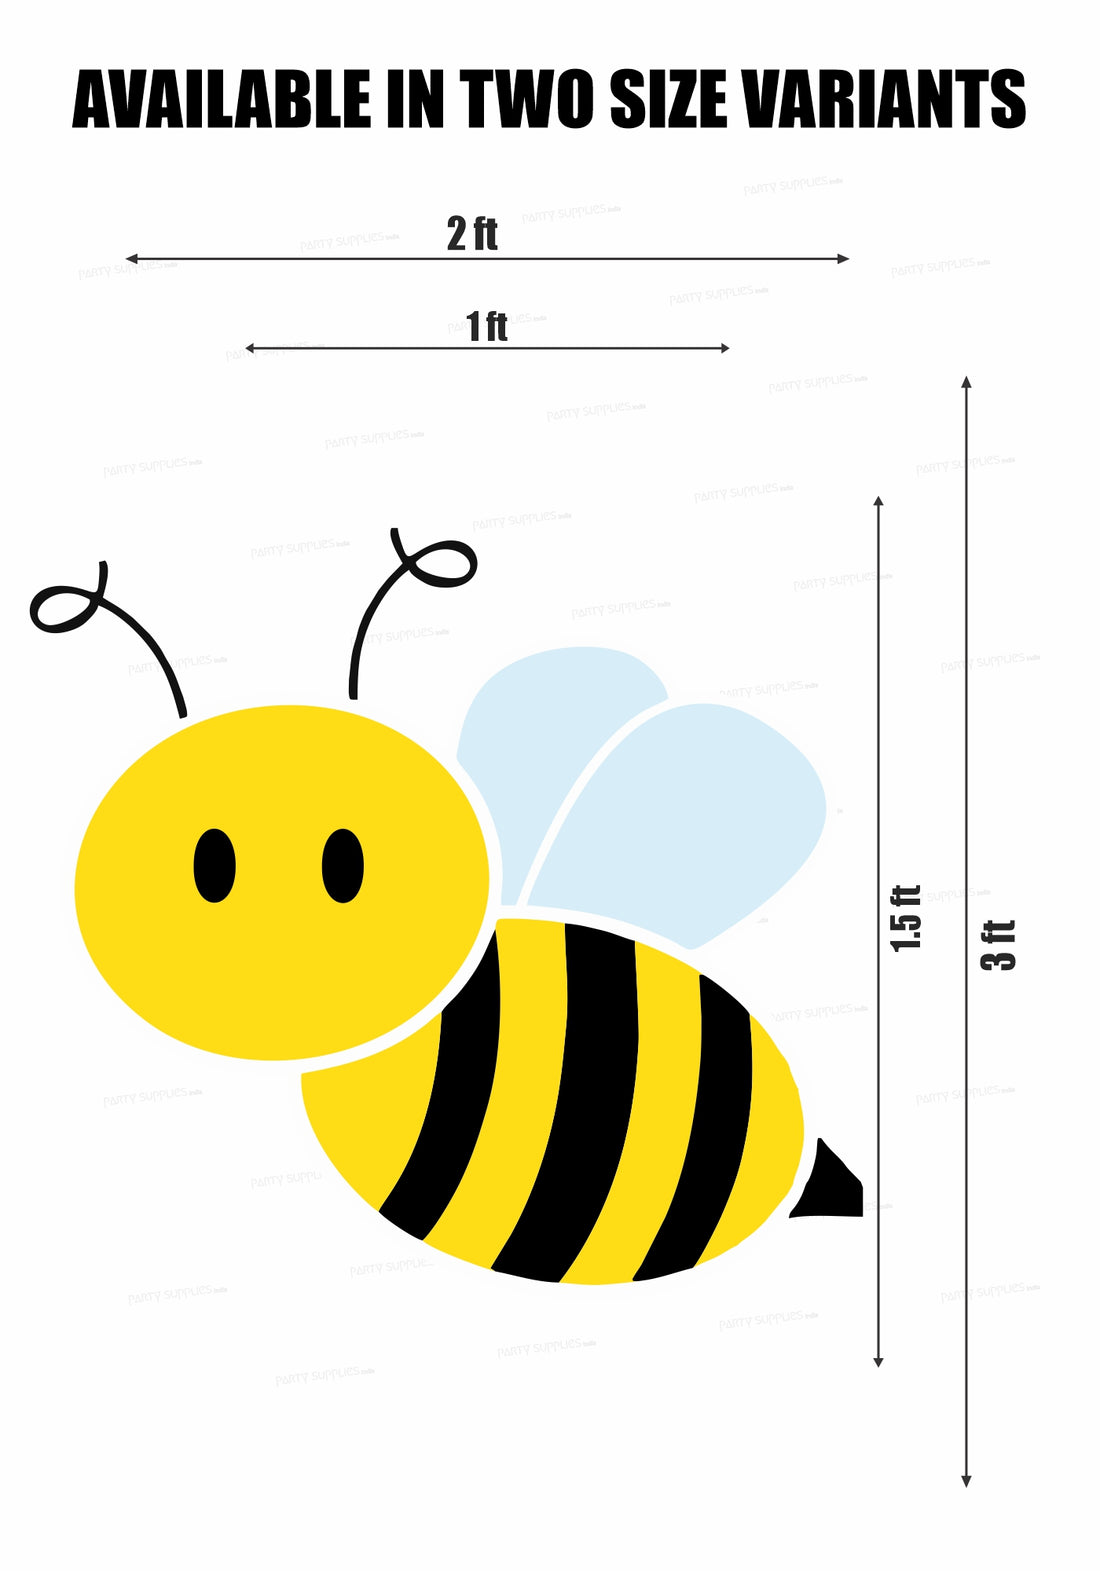 PSI Bumble Bee Theme Cutout - 14